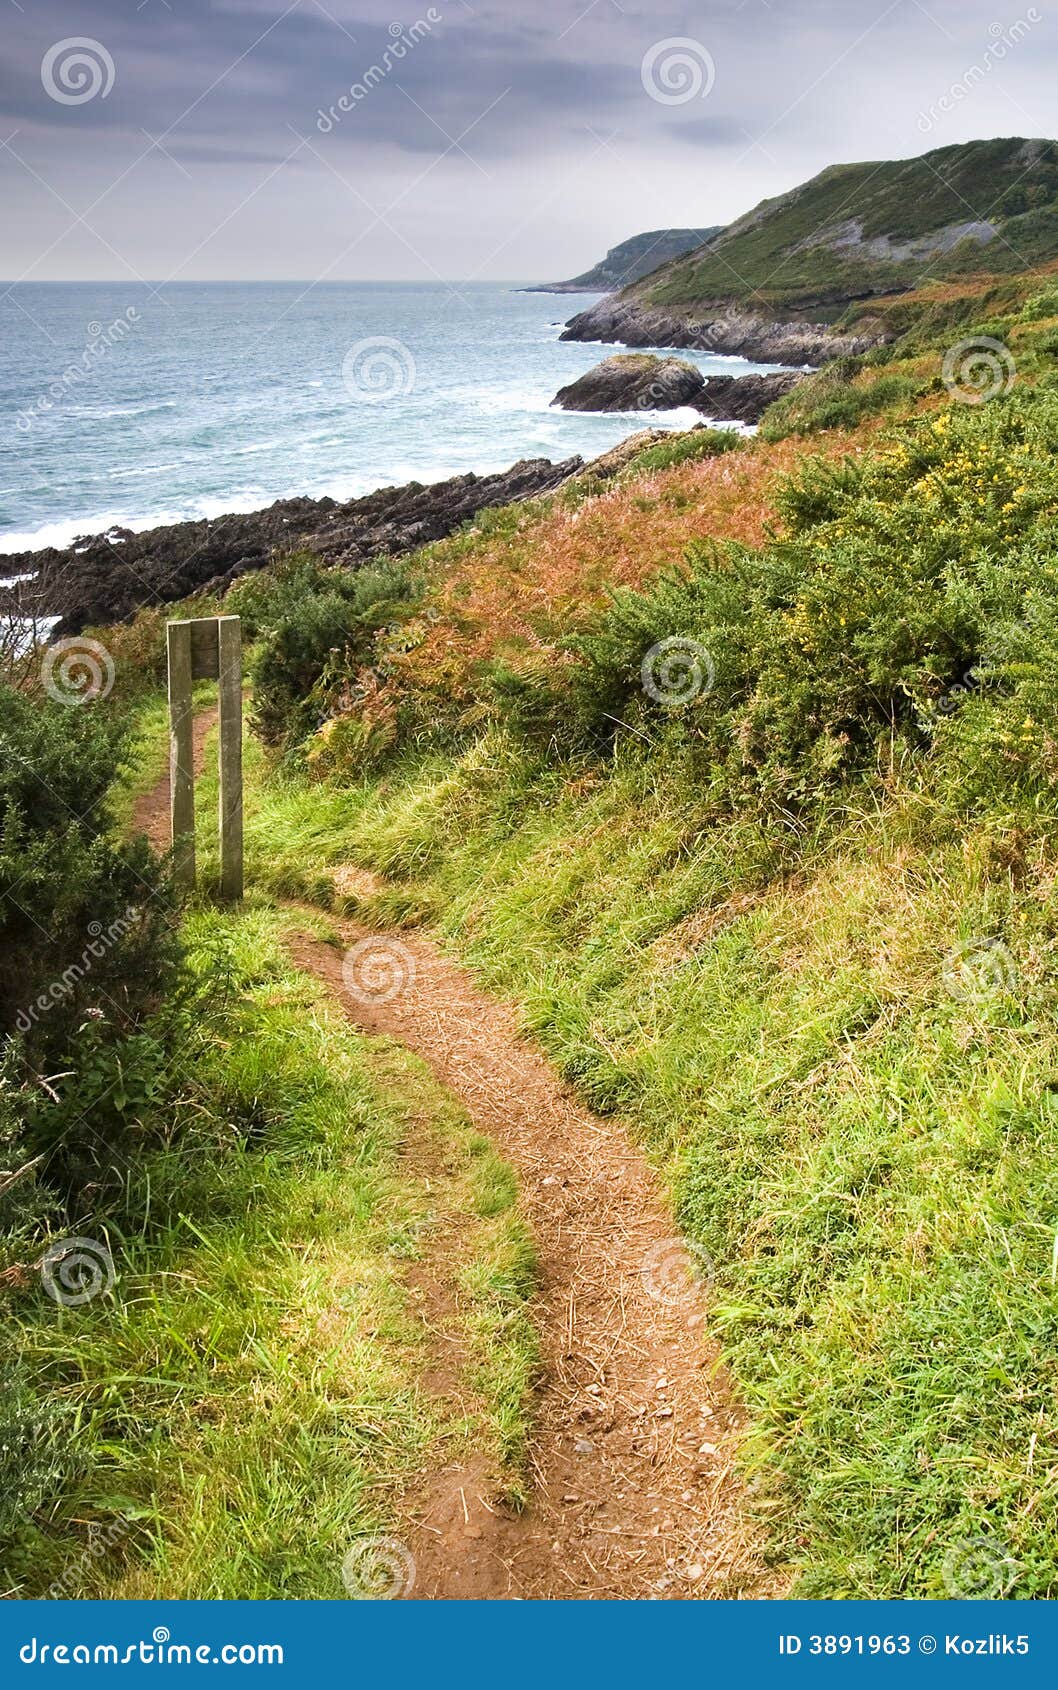 Coastline walk along the sea in South Wales